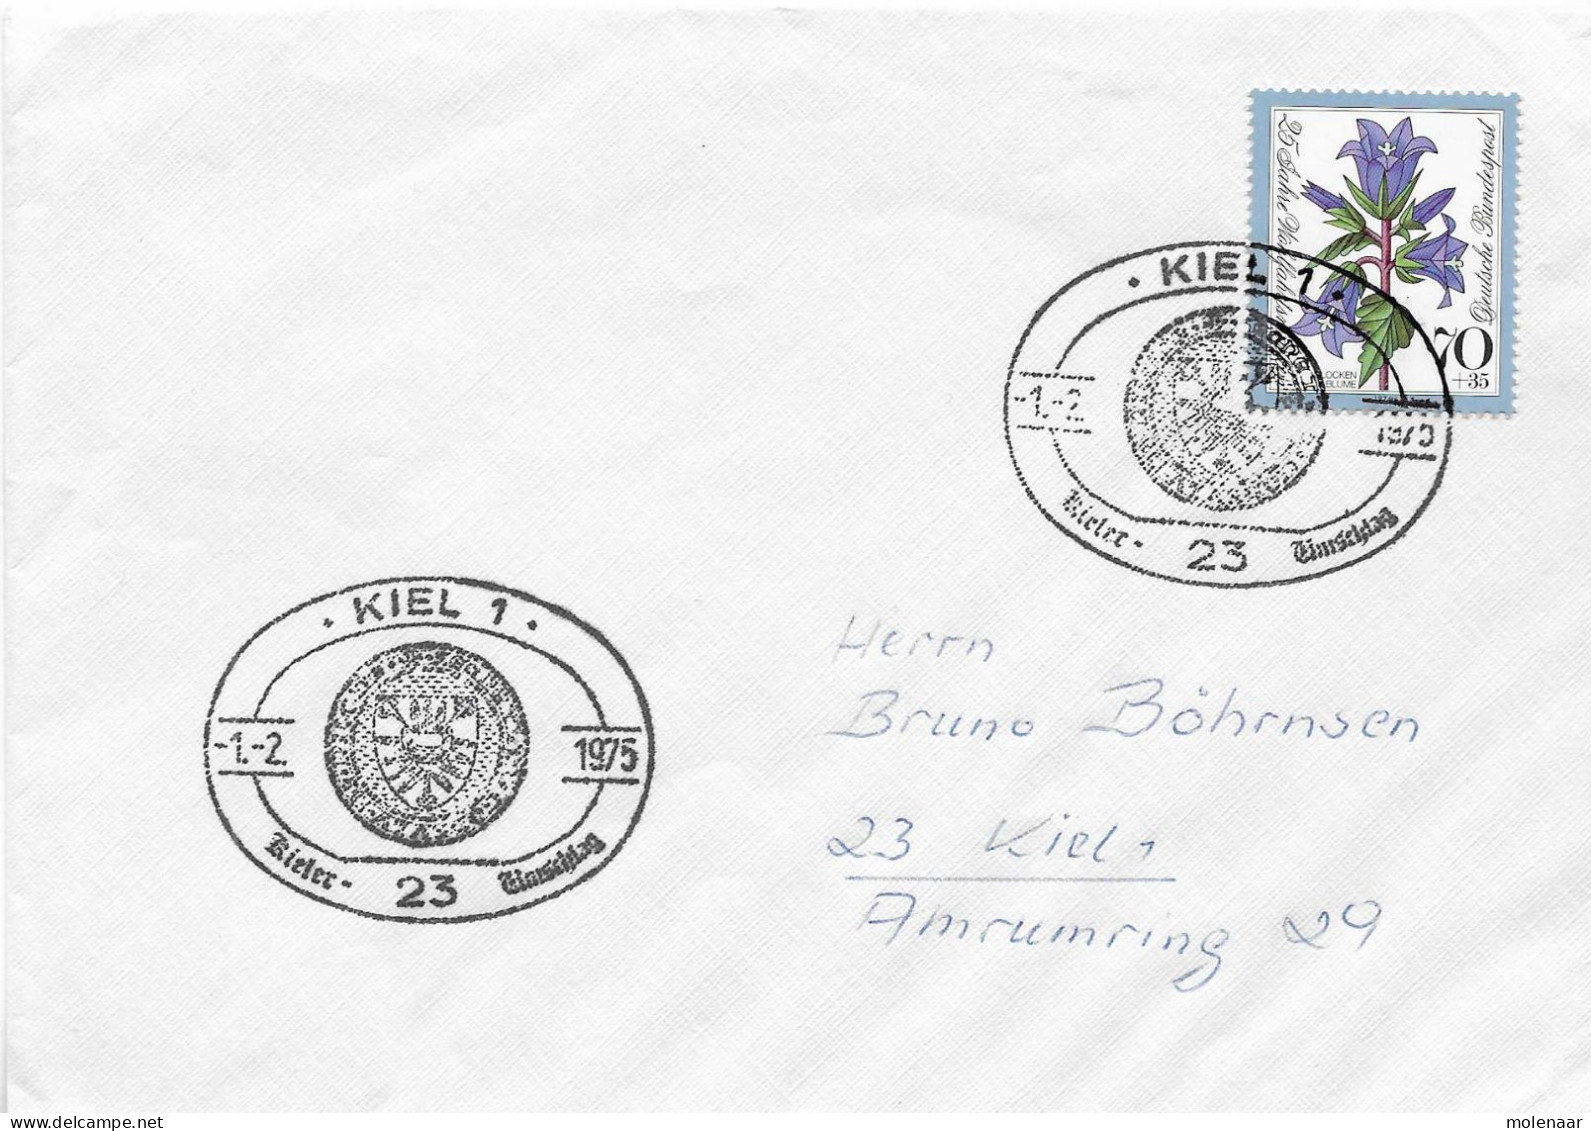 Postzegels > Europa > Duitsland > West-Duitsland > 1970-1979 > Brief Met No. 821 (17299) - Covers & Documents